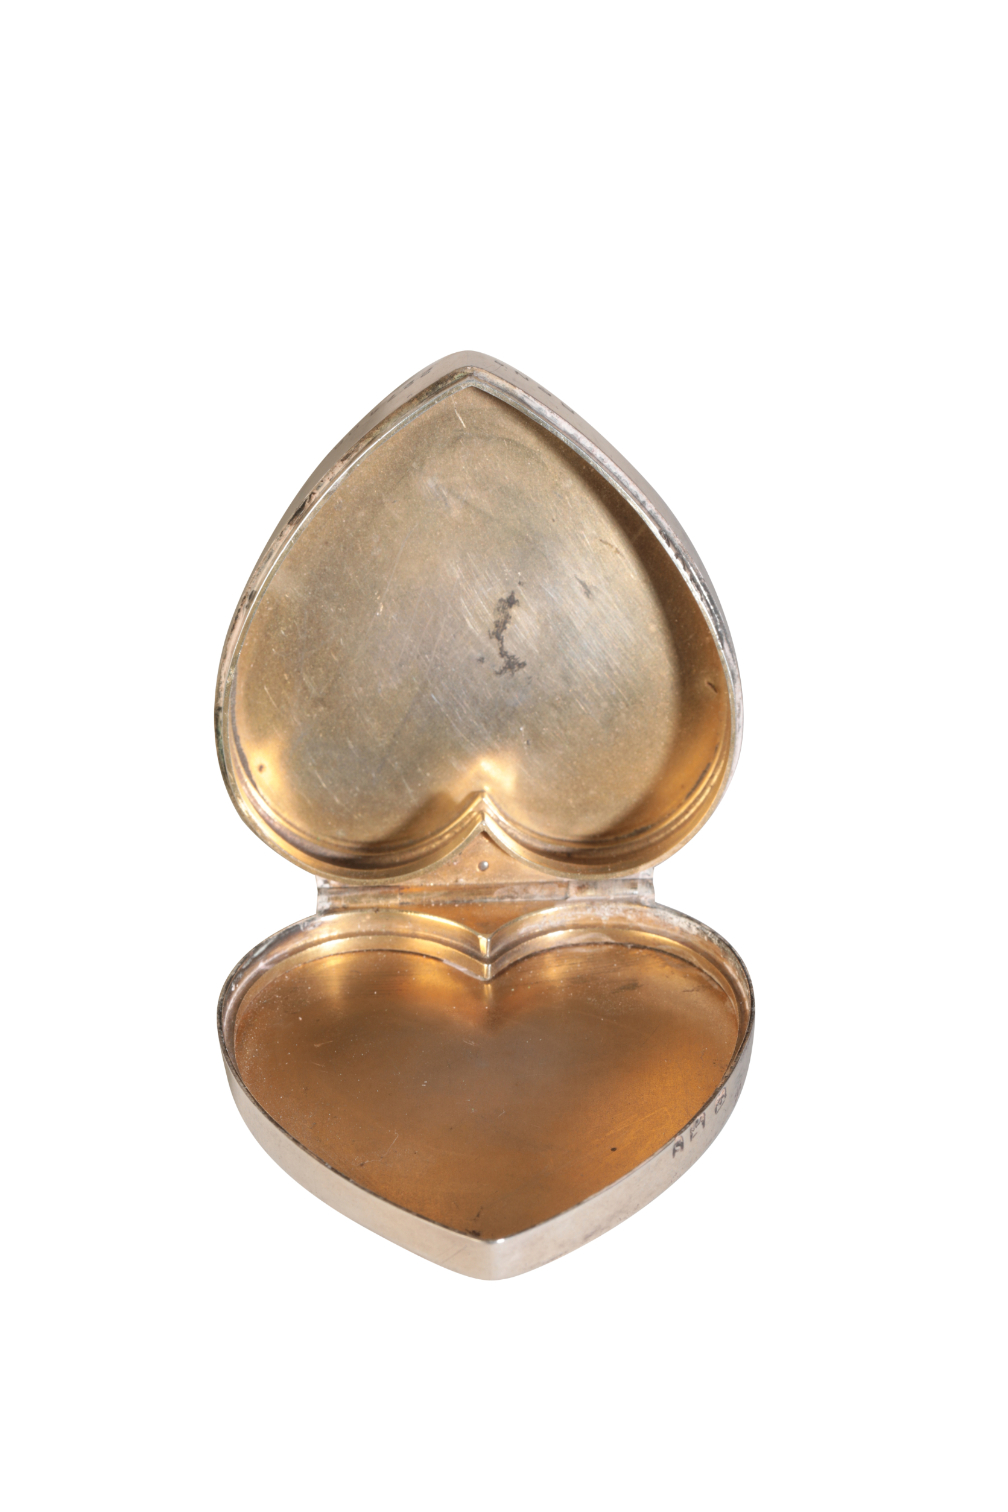 A VICTORIAN SILVER MOUNTED MALACHITE HEART SHAPED BOX - Image 4 of 4